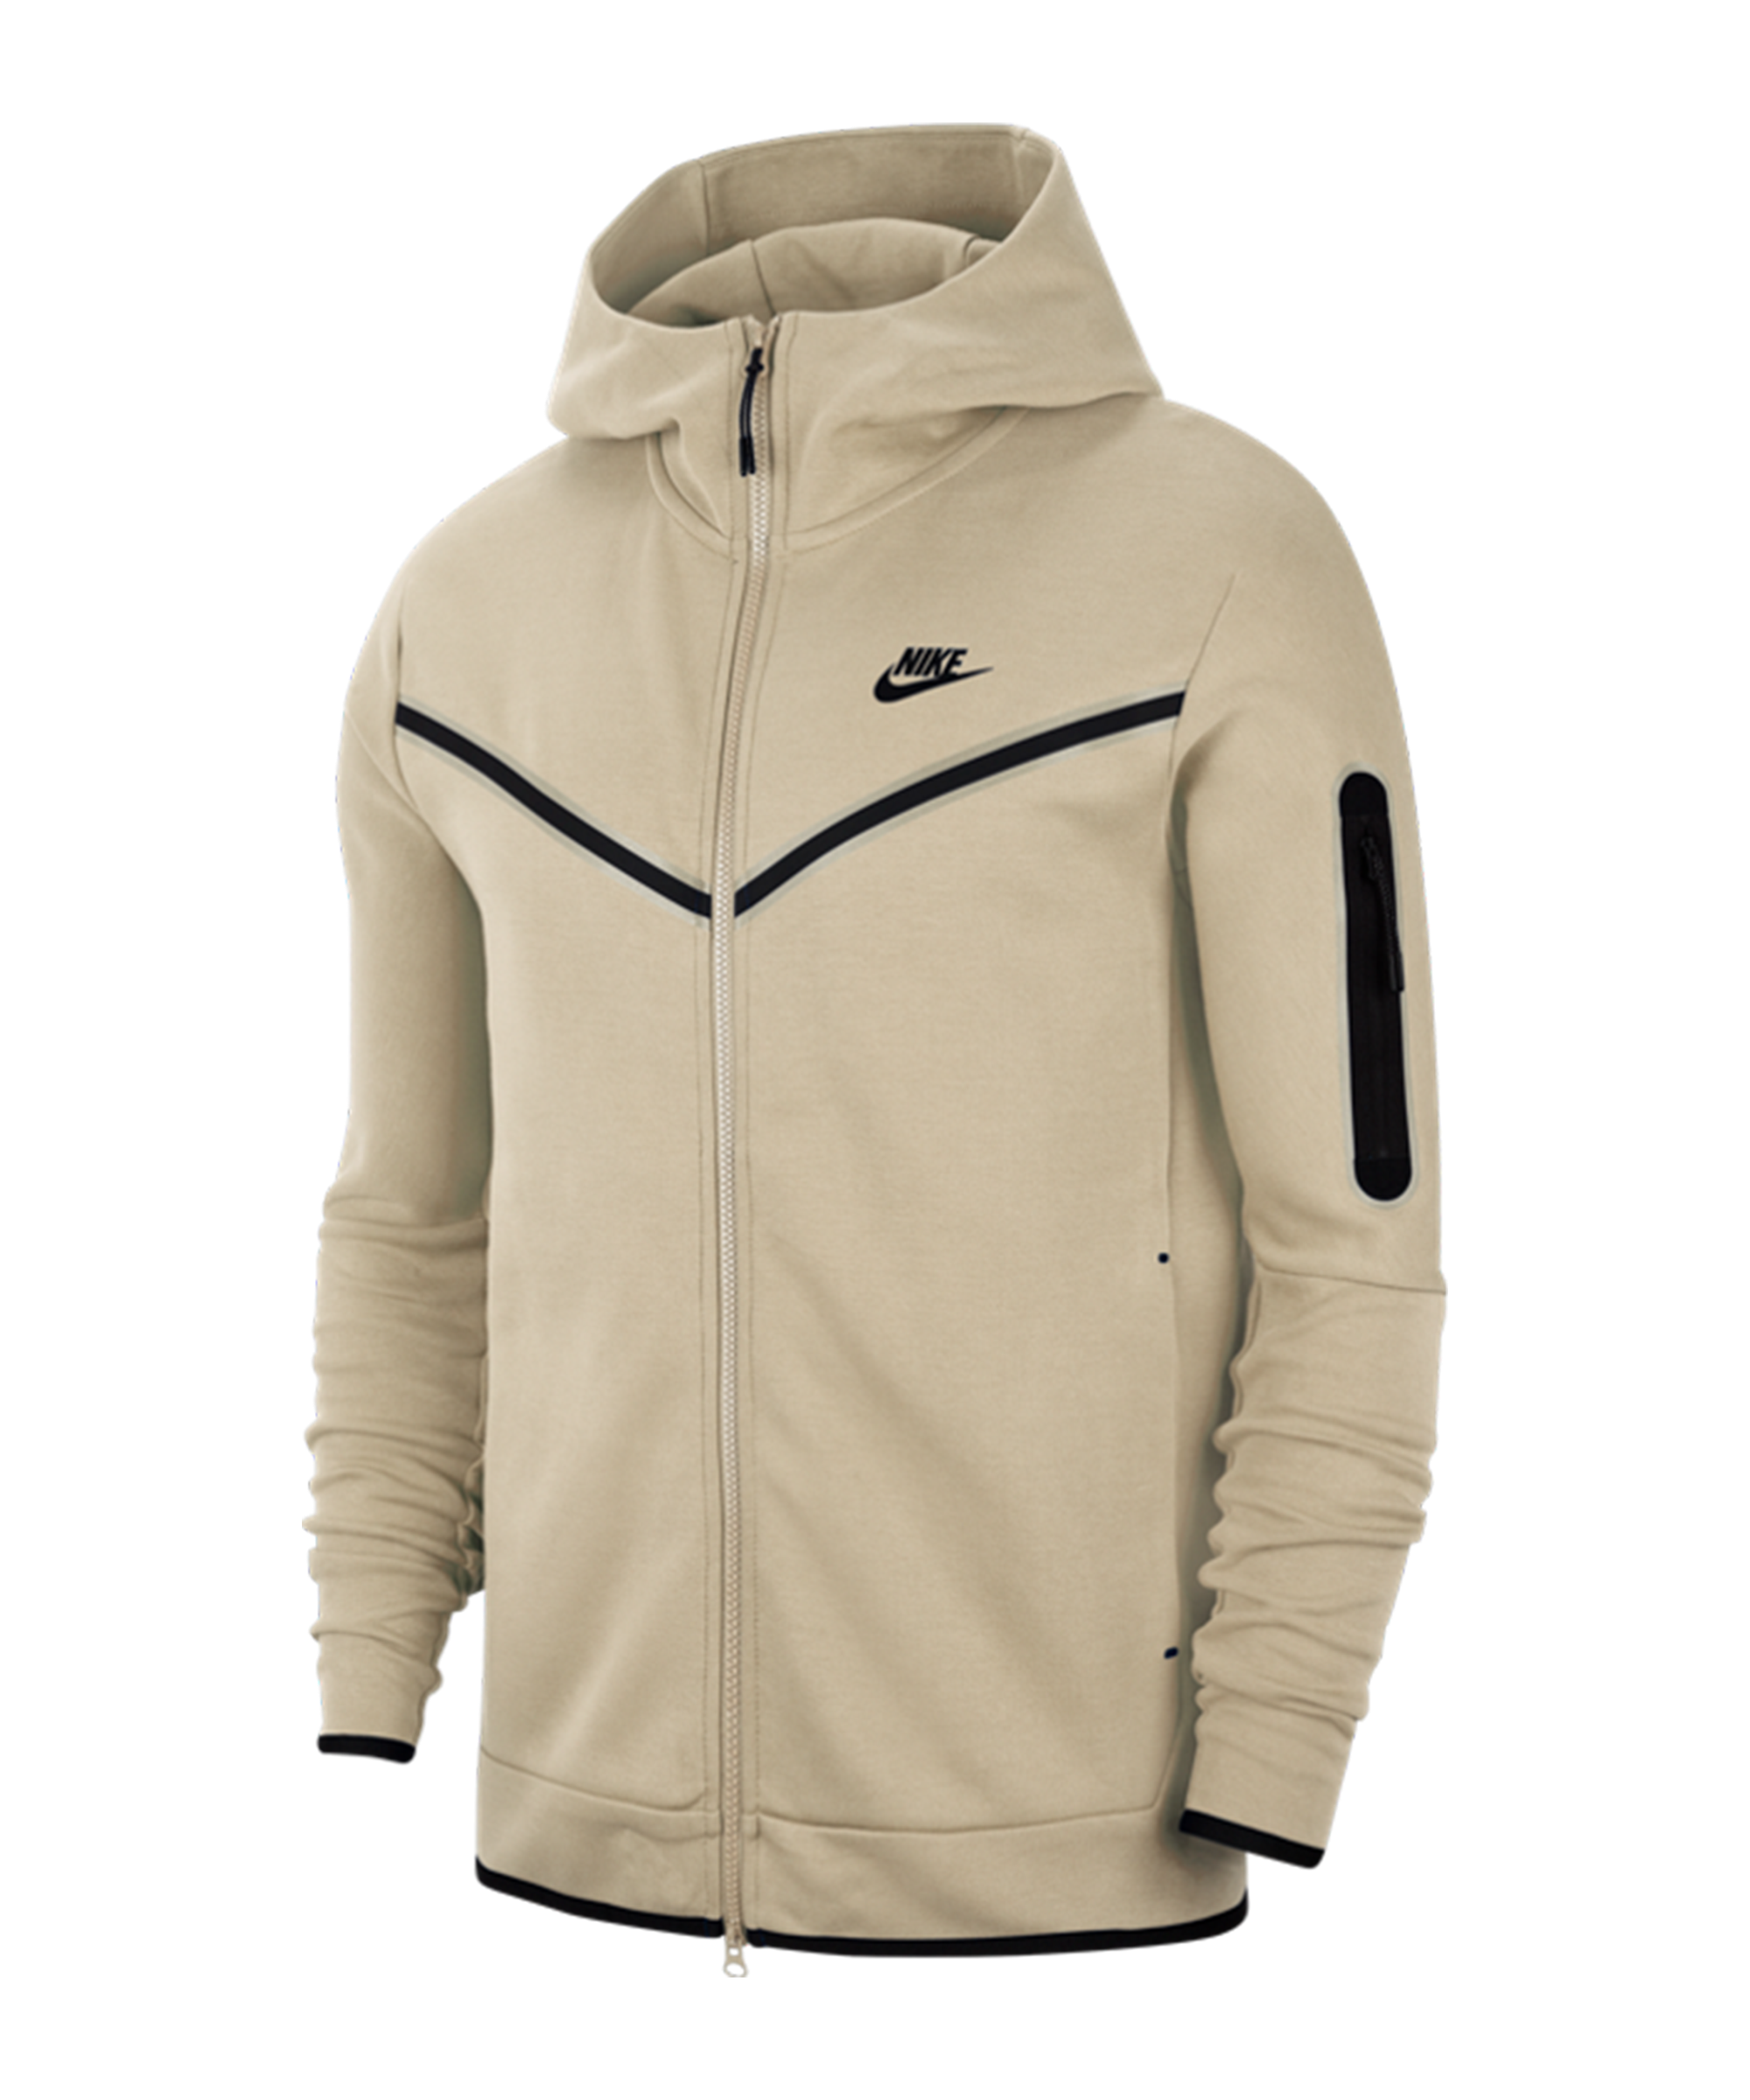 Nike Tech Fleece Bomber Jacket - beige